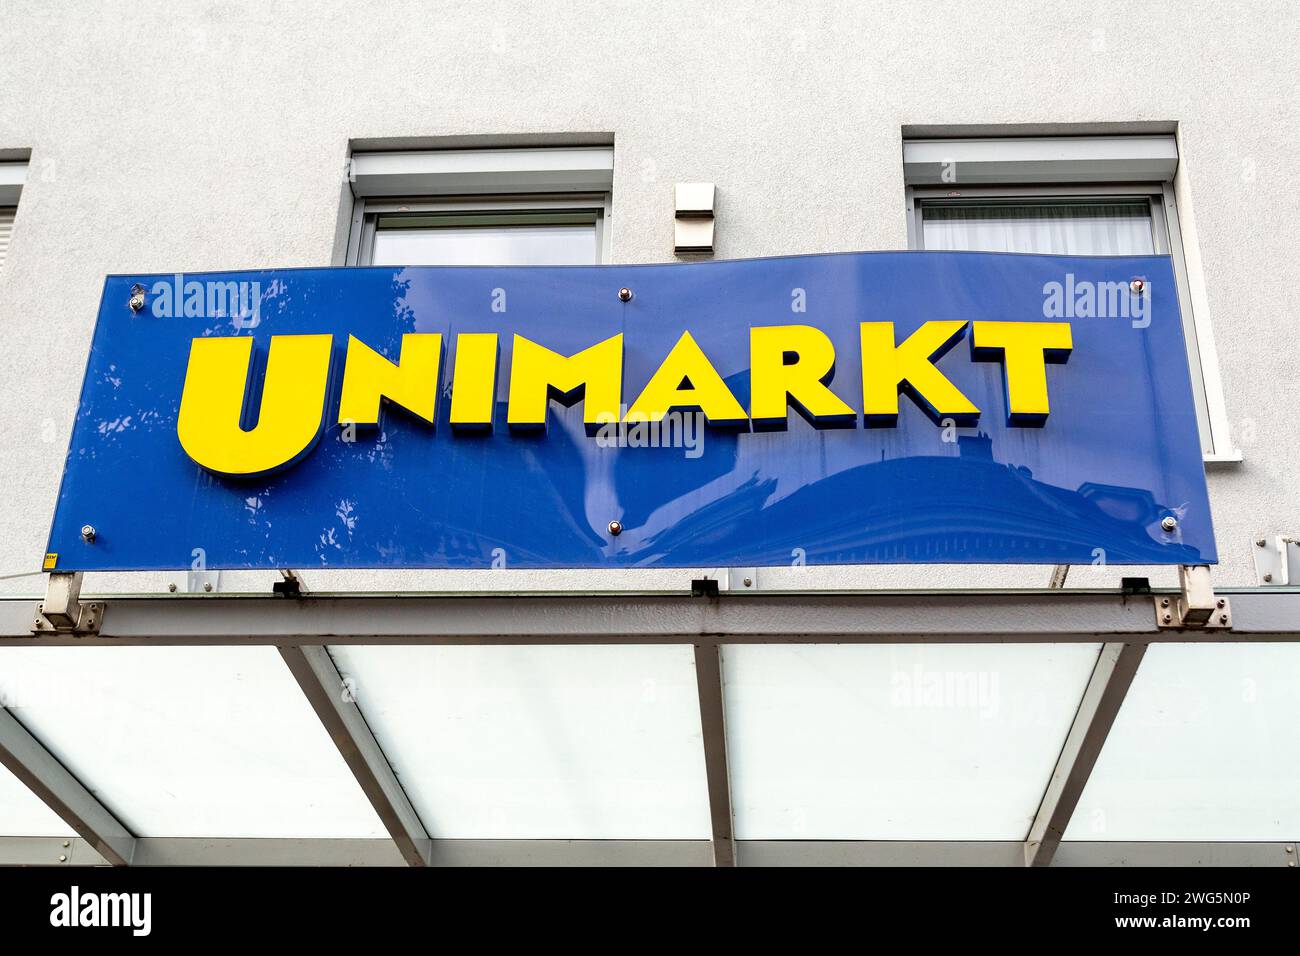 Unimarkt Branch, Upper Austria, Austria Stock Photo